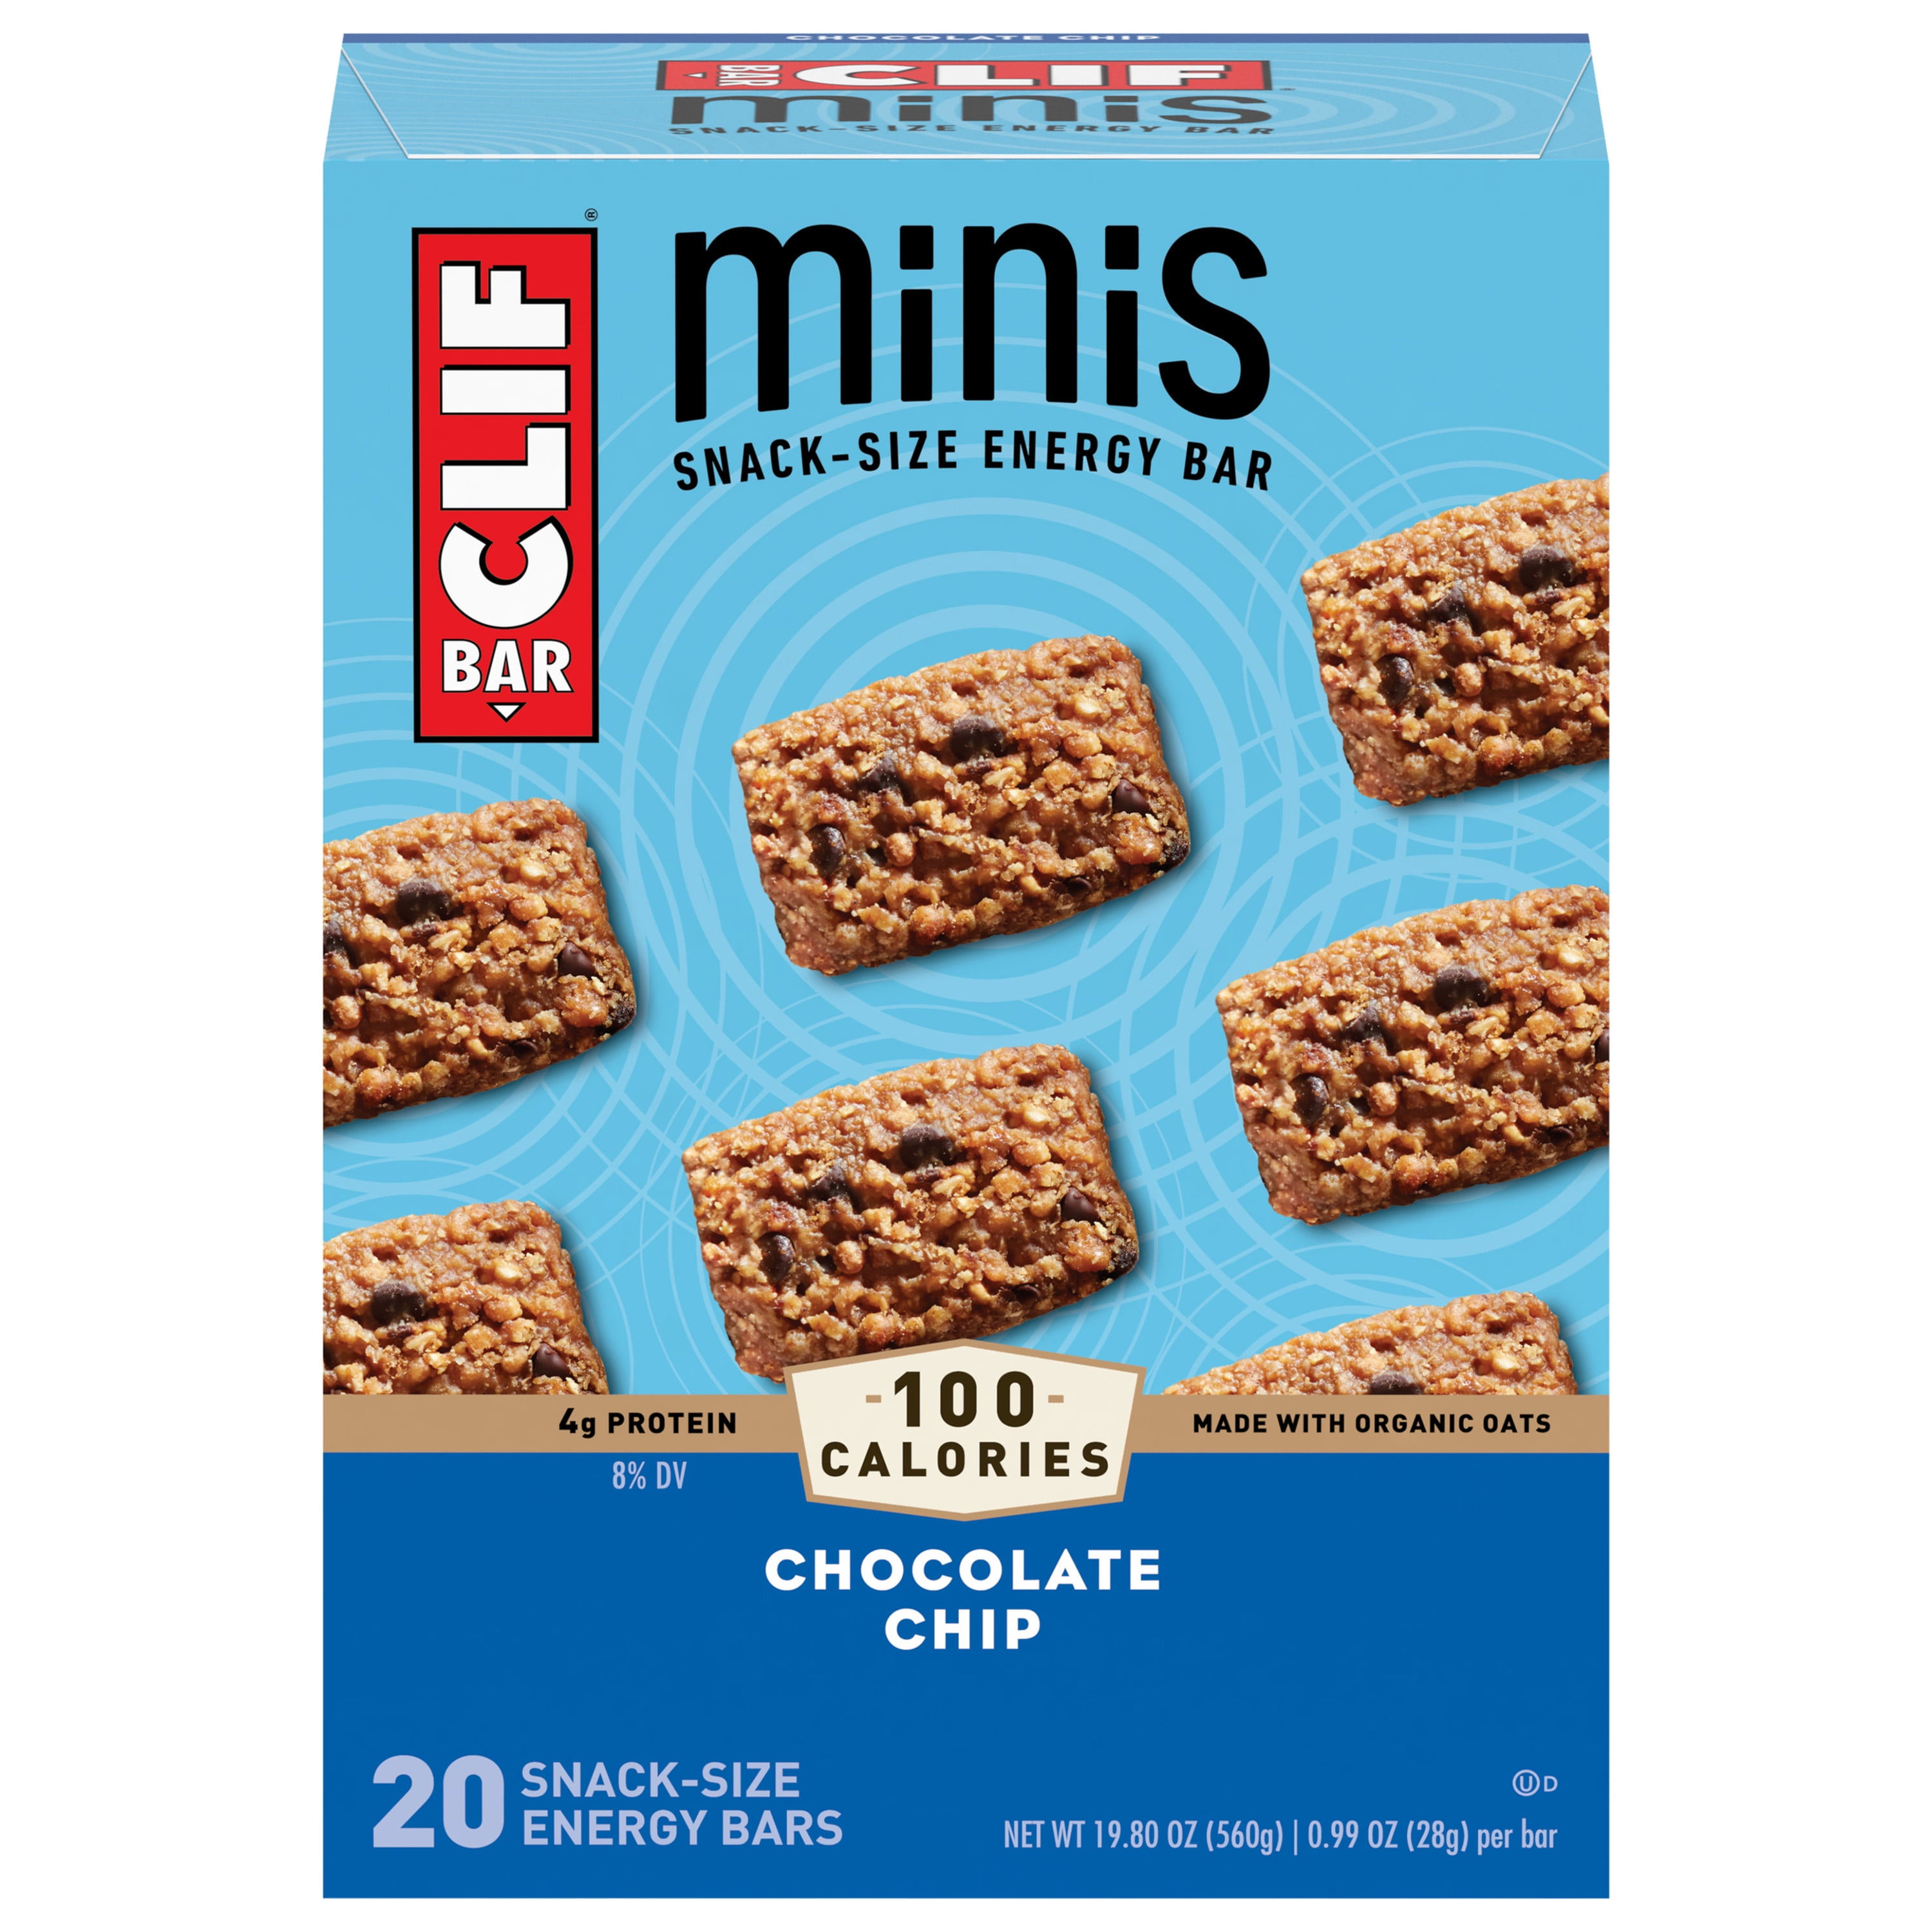 Clif Bar Minis Energy Bars, Chocolate Chip, 4g Protein Bar, 20 Ct, 0.99 oz